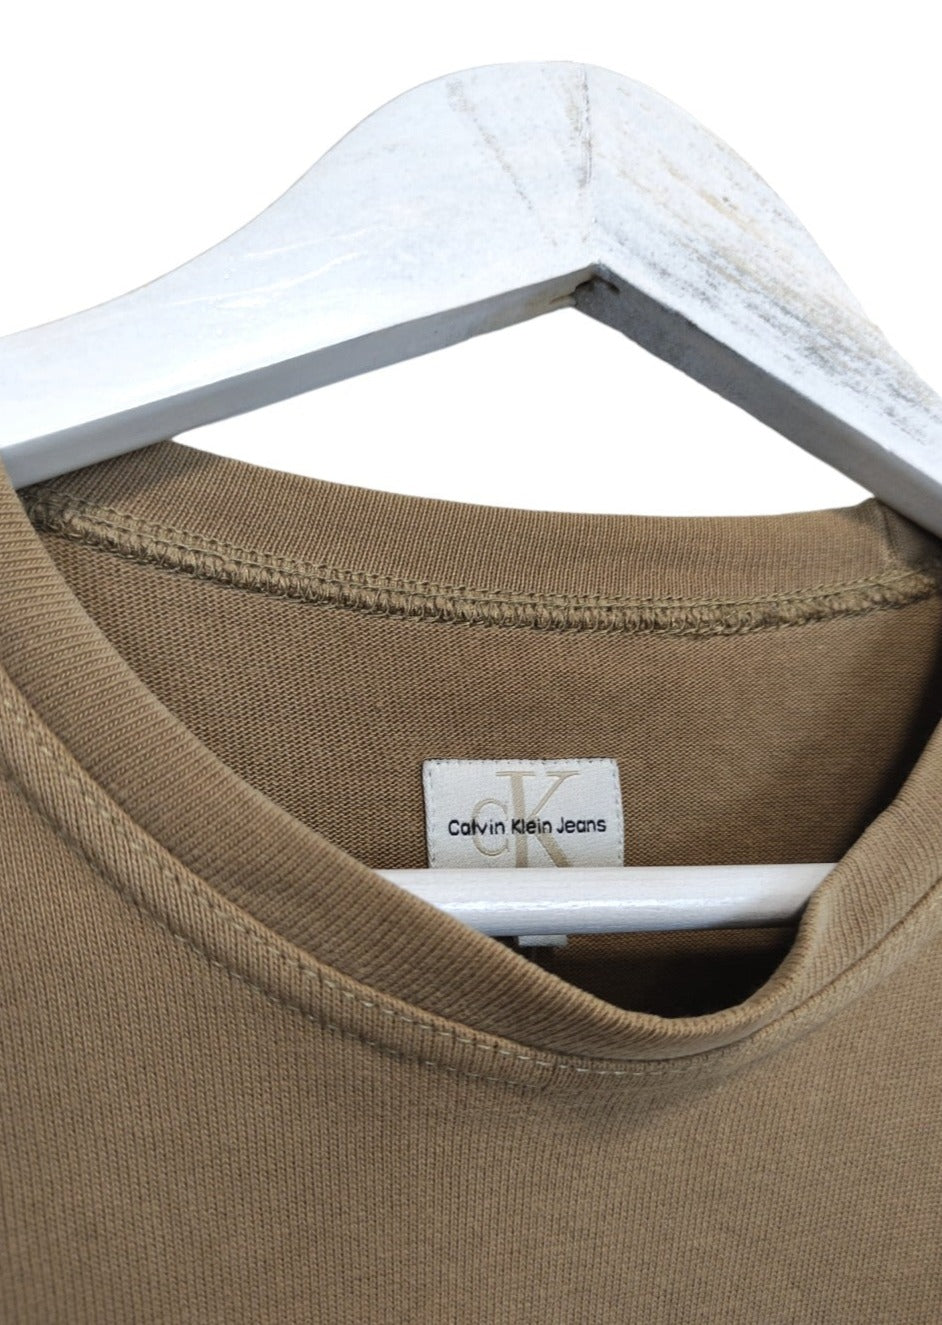 Premium Branded Ανδρική Μπλούζα στο χρώμα του Πούρου (Medium)